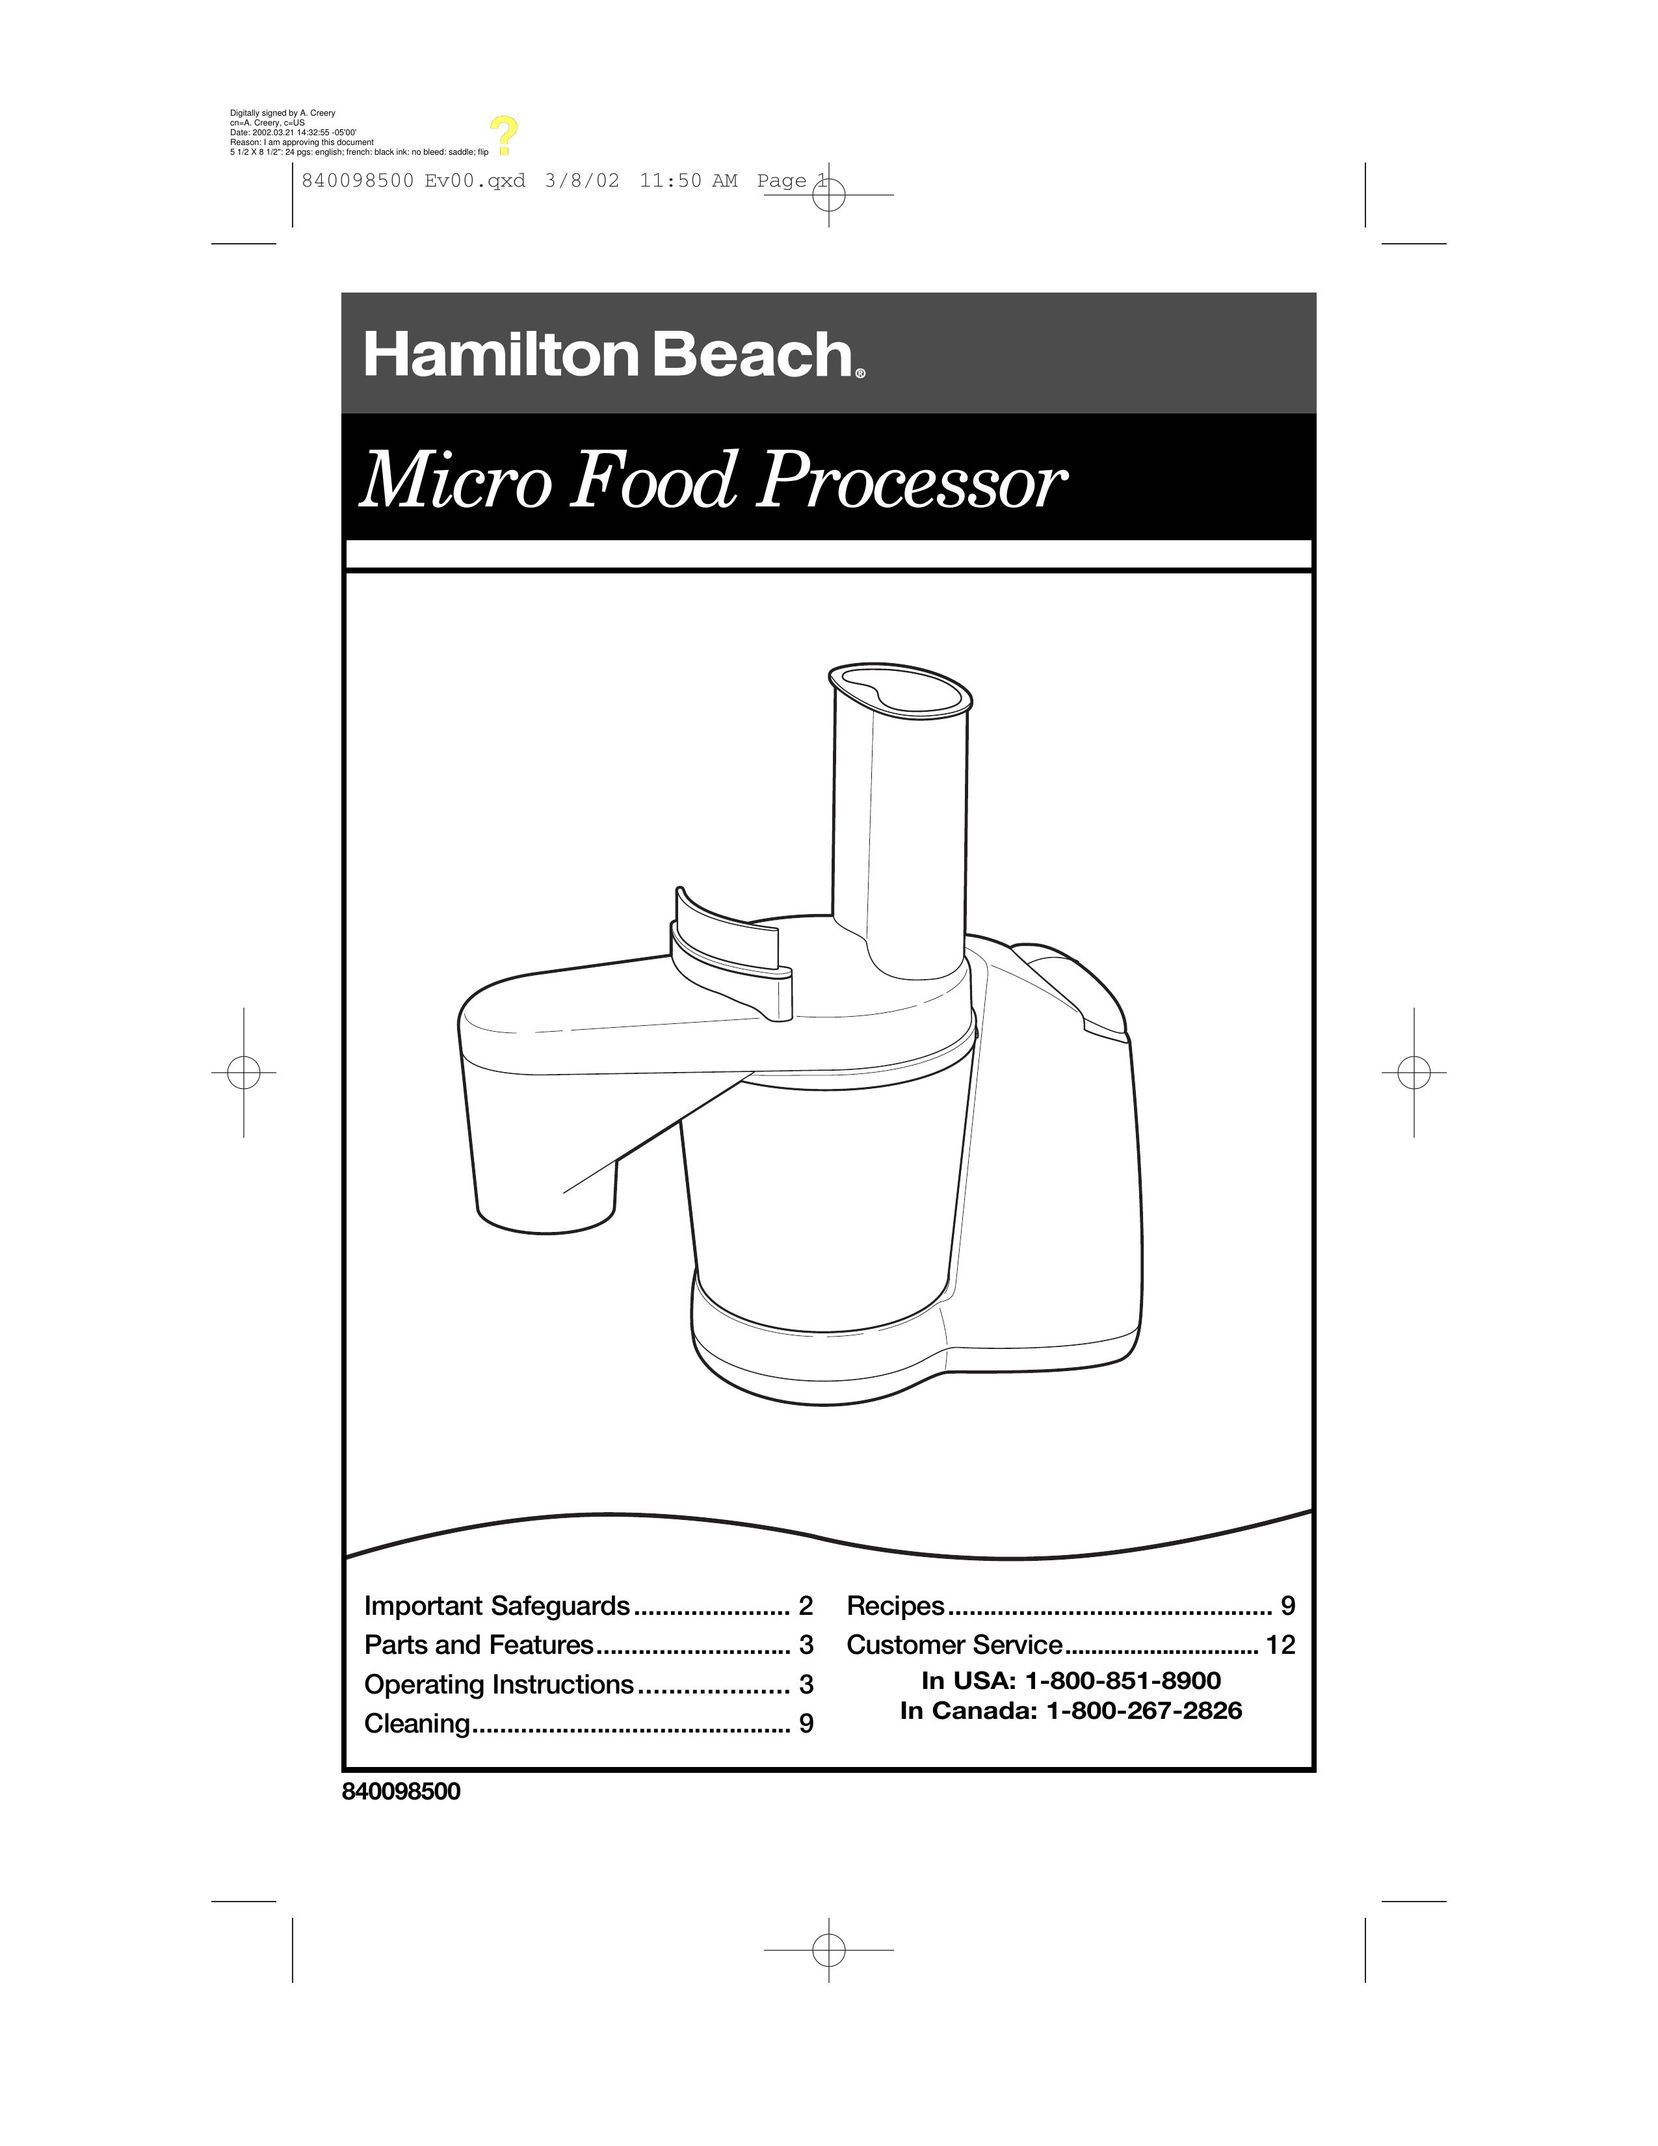 Hamilton Beach 70200 Blender User Manual